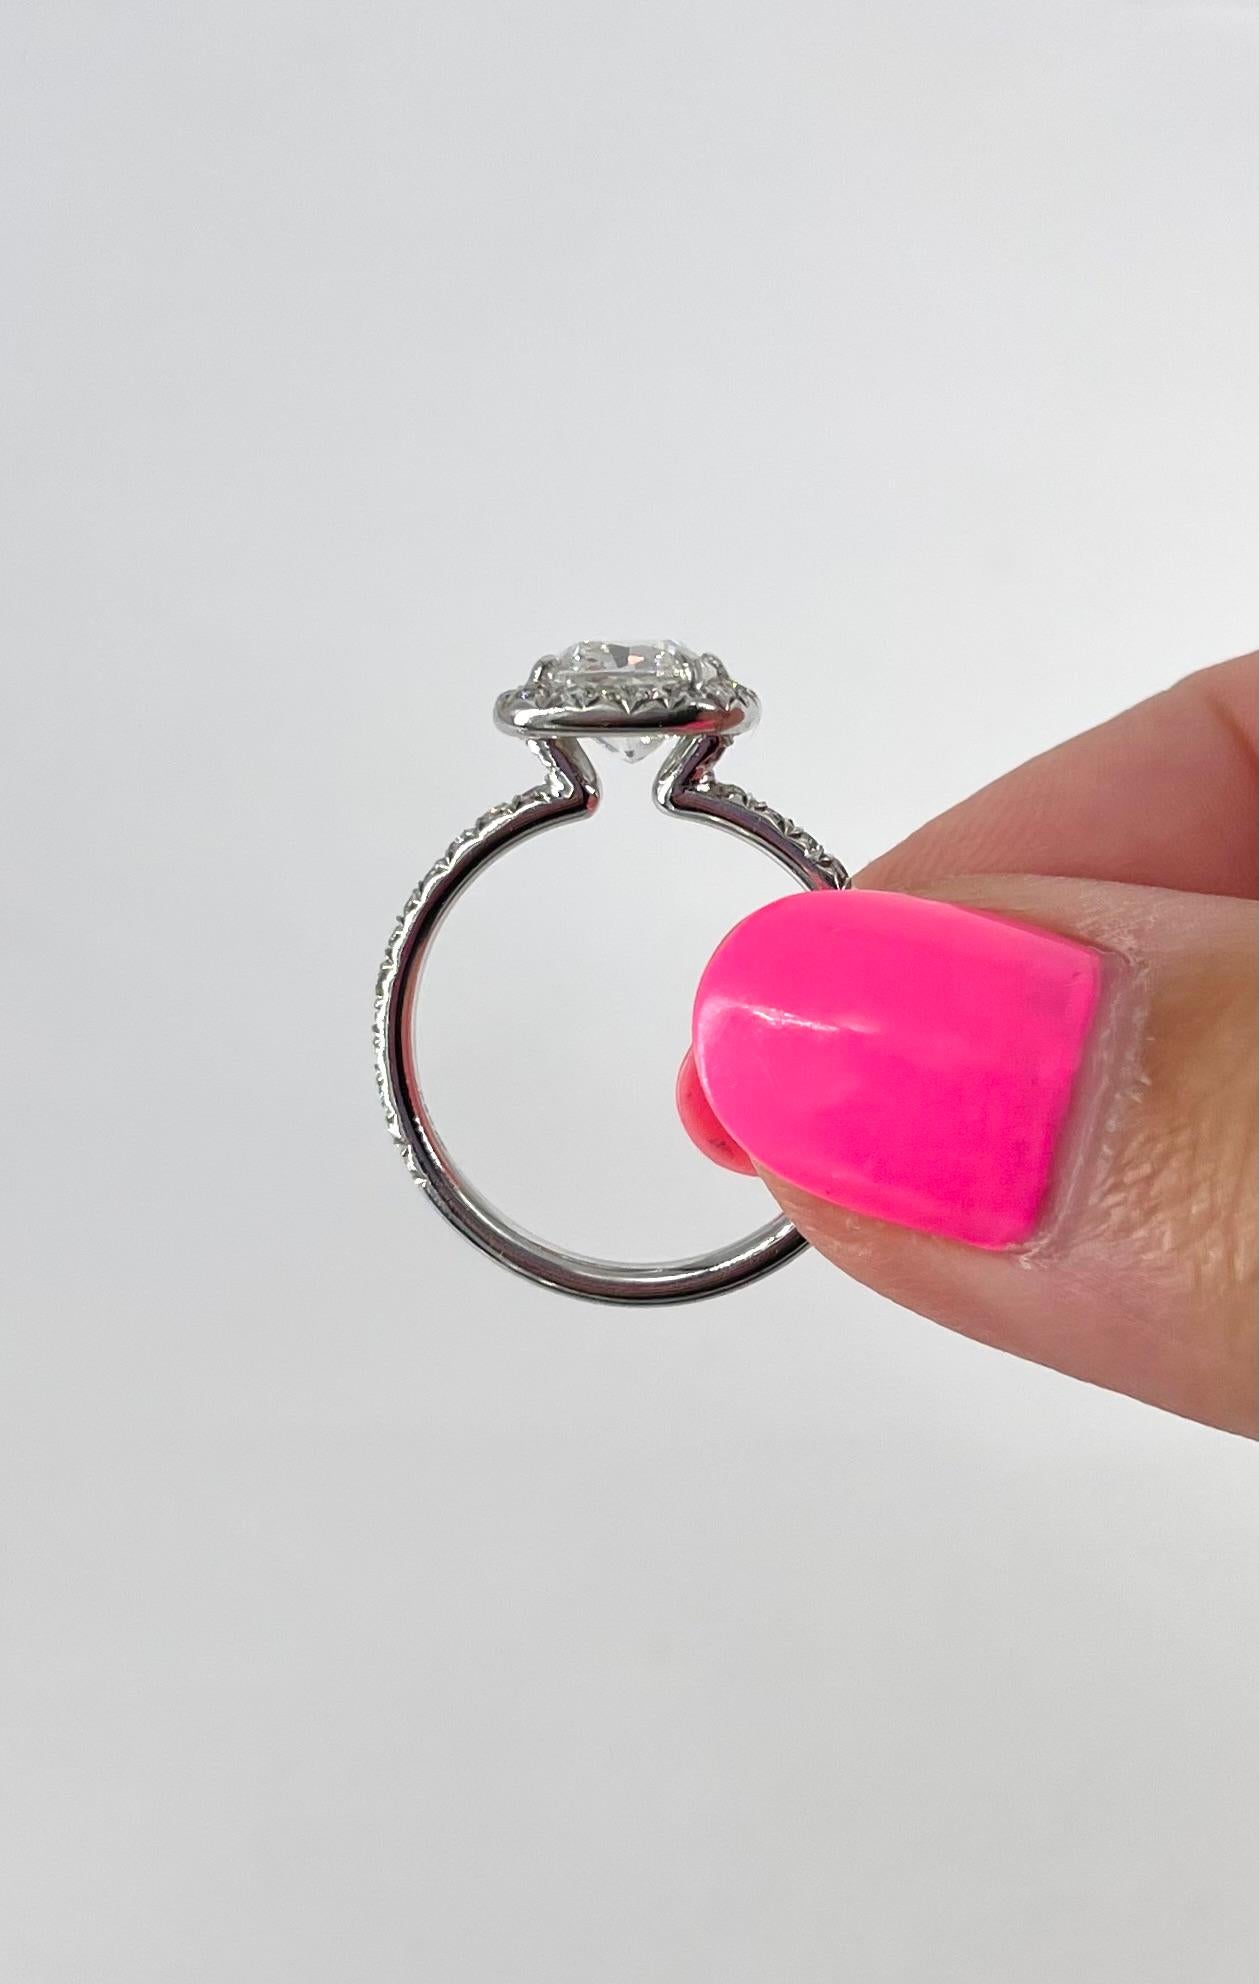 J. Birnbach 1.51 carat Cushion Cut Diamond Halo Engagement Ring in Platinum For Sale 2